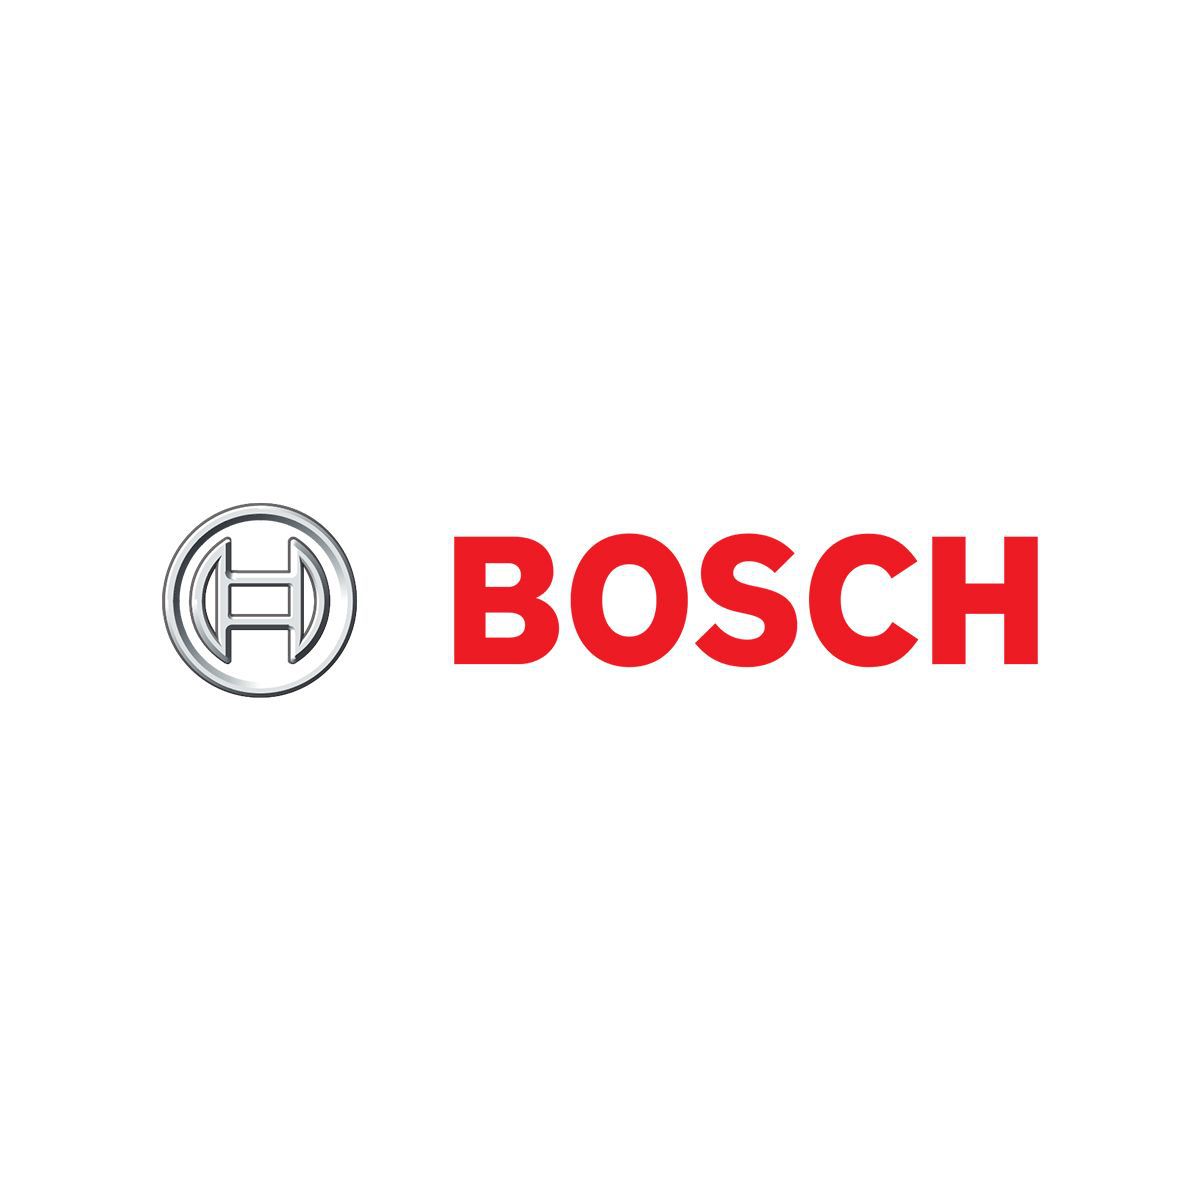 Conjunto Reparo ZF Bosch Caixa Direção Hidráulica Volkswagen Golf / New Beetle / Bora / Audi A3 de 1999 Em Diante